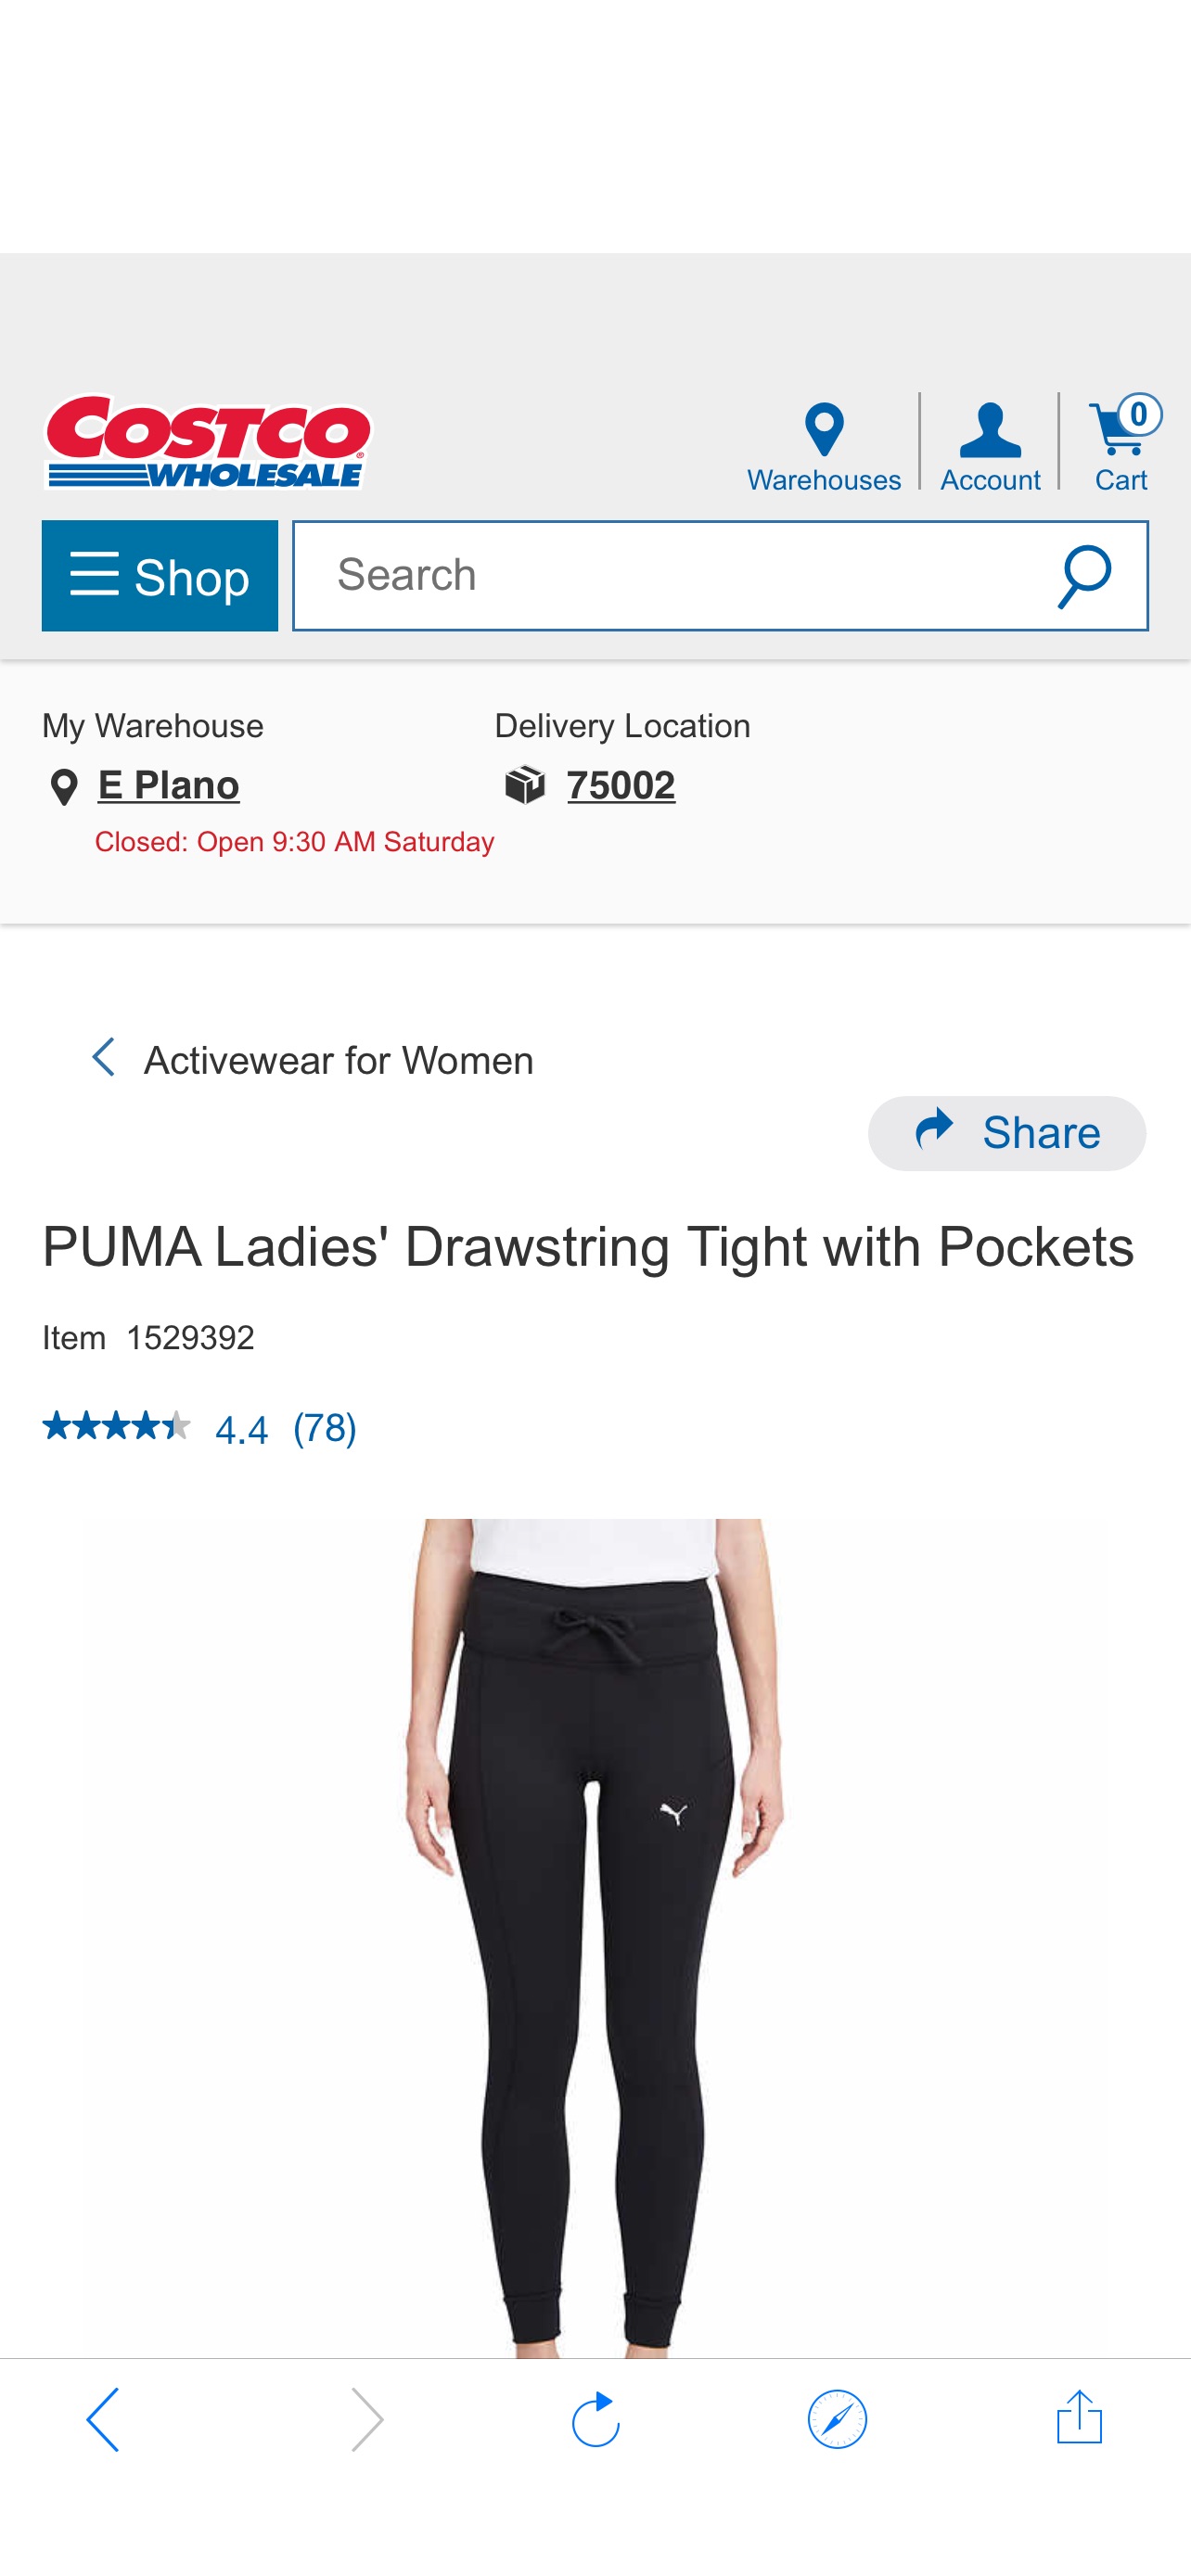 PUMA Ladies' Drawstring Tight with Pockets | Costco BUG价$4.97 一条